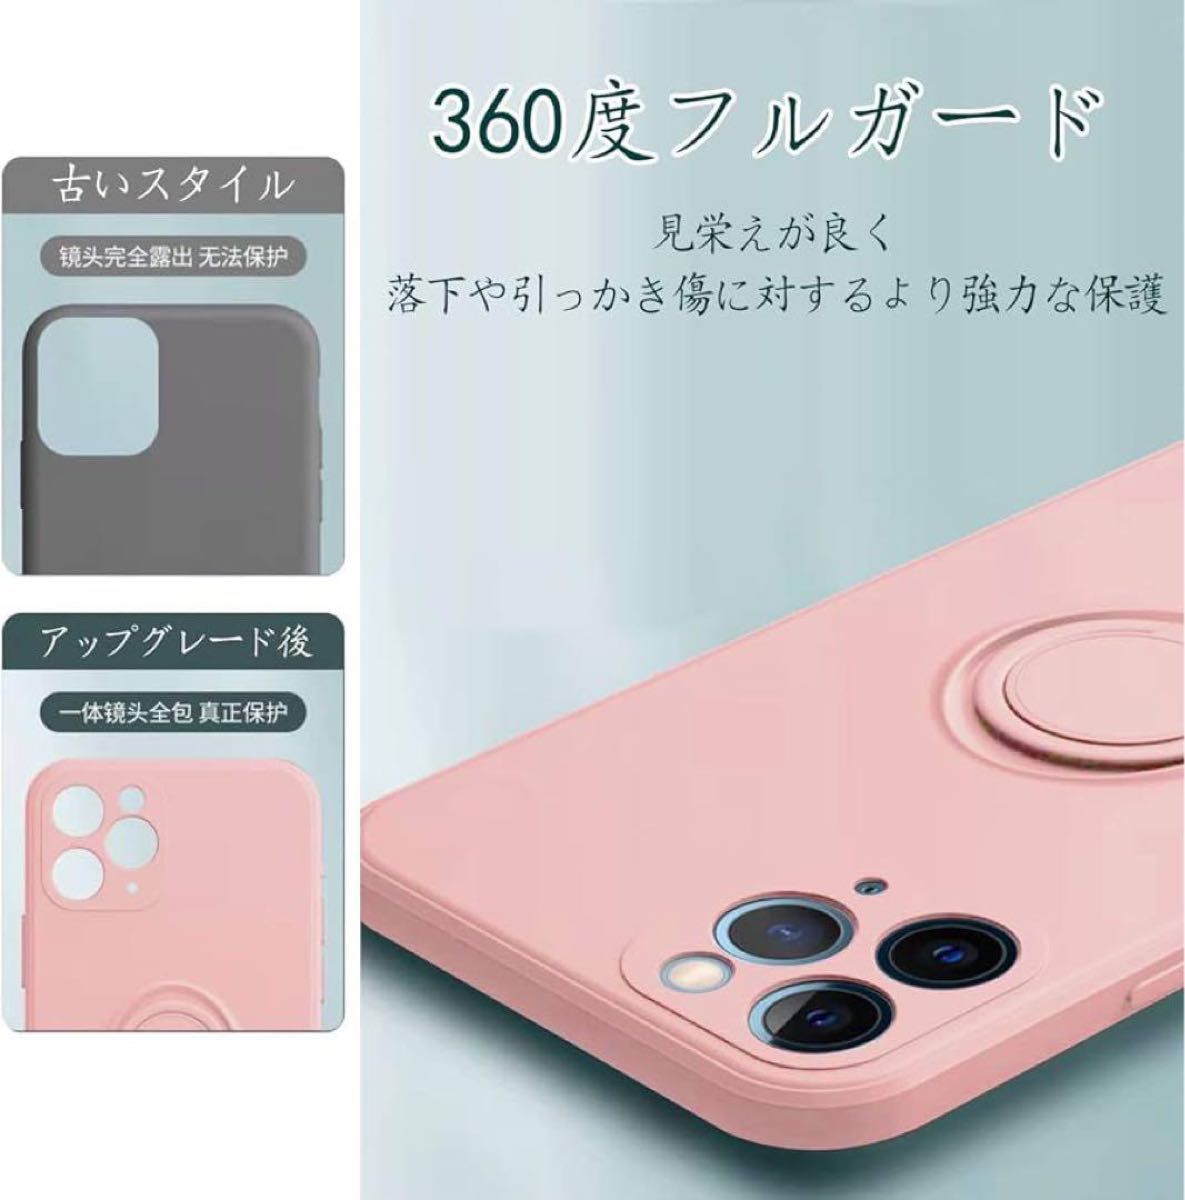 iPhone 11 pro max ケース リング付き 回転 シリコン 全面保護 リング付ケース 耐衝撃 超軽量 指紋防止 ピンク